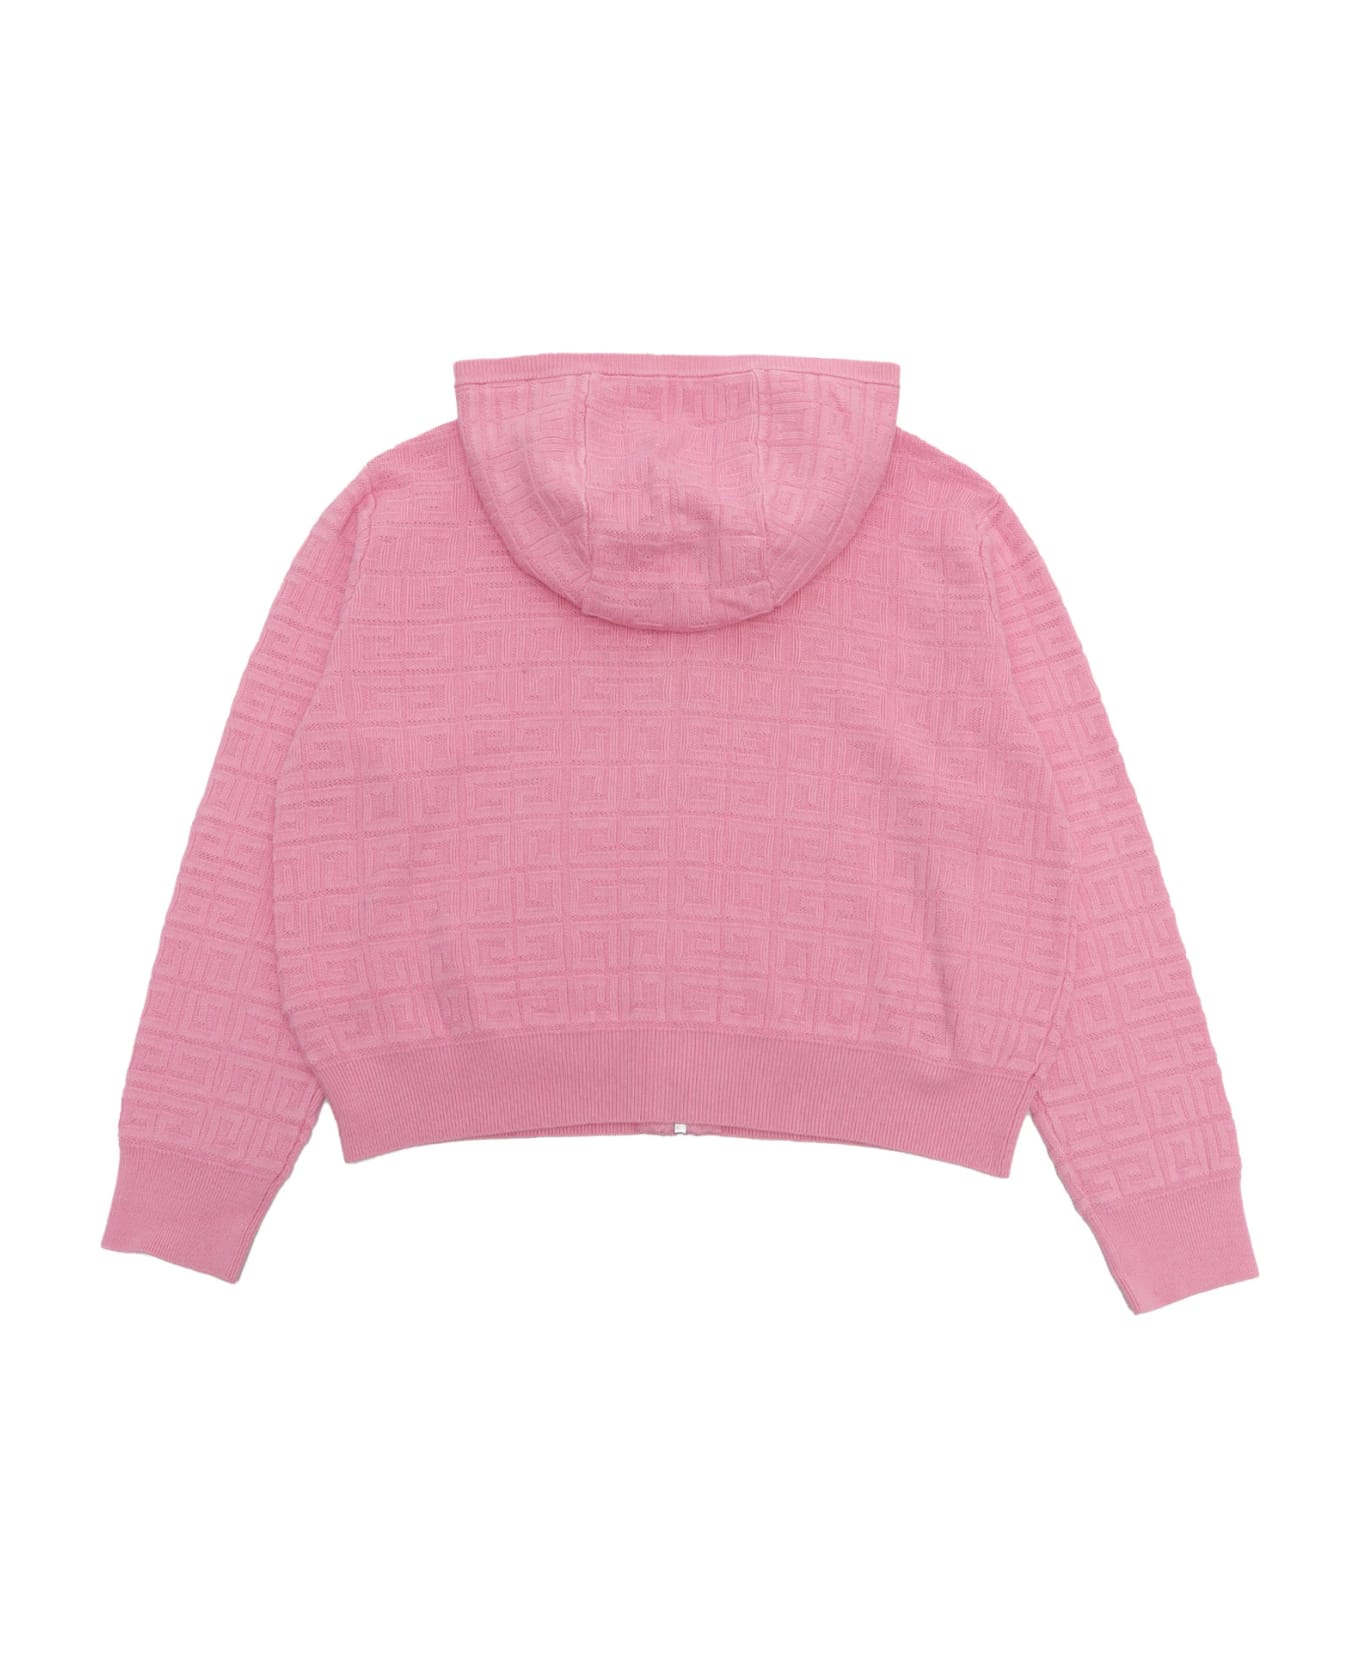 Givenchy Pink Tricot Sweatshirt - PINK